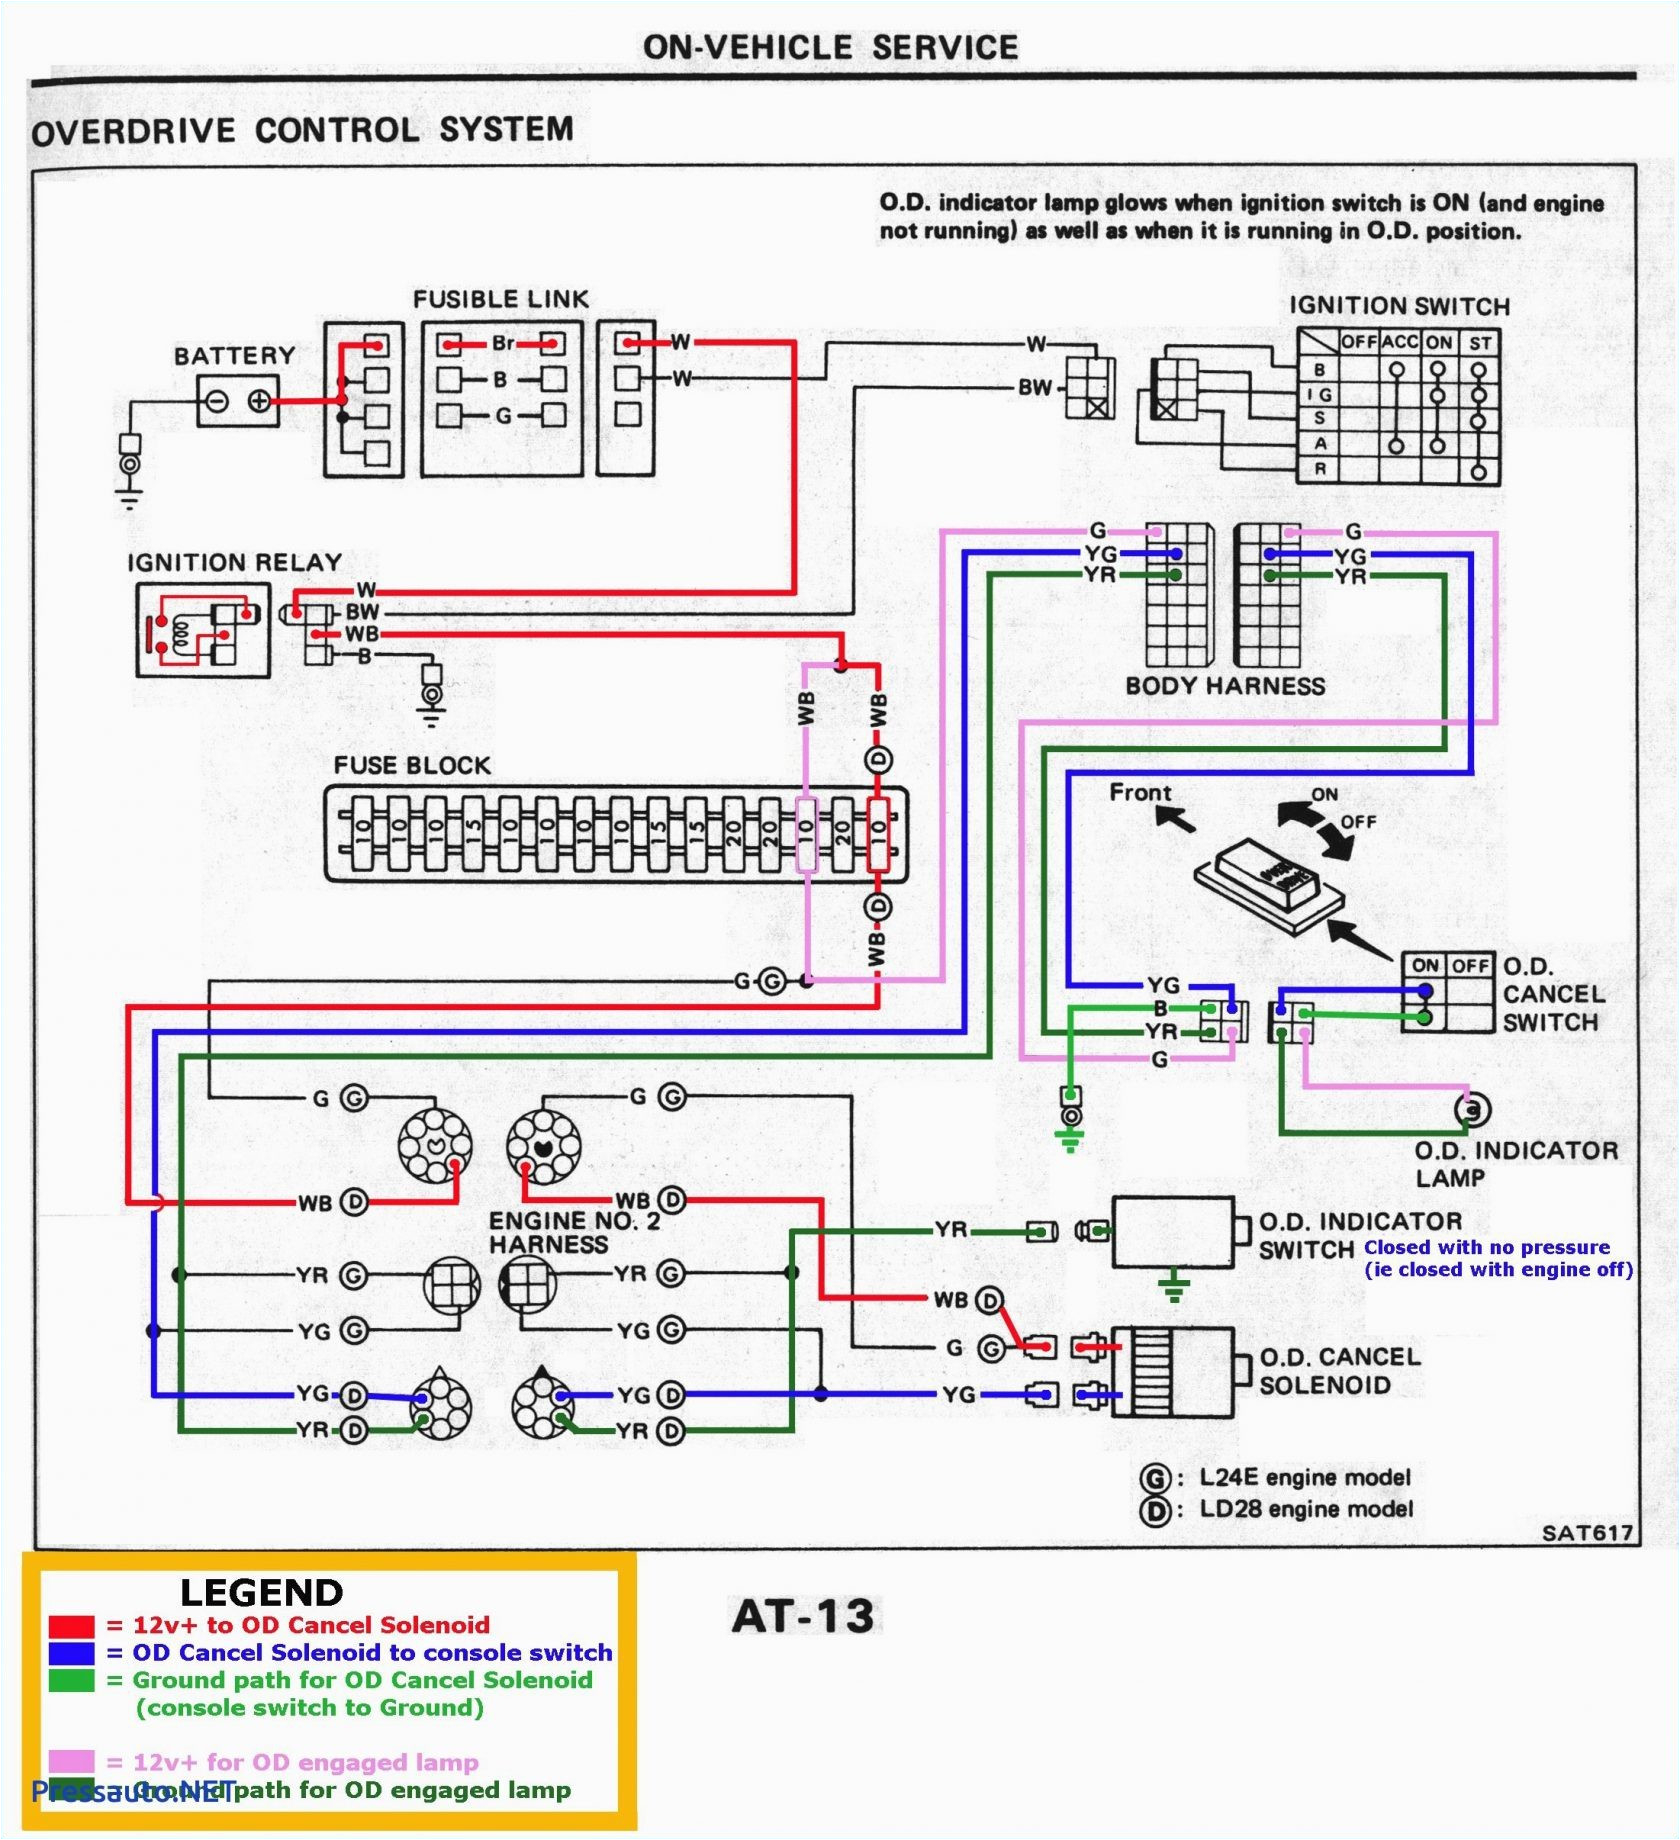 detroit sel wiring diagrams wiring diagram passsel wire harness wiring diagram detroit sel wiring diagrams